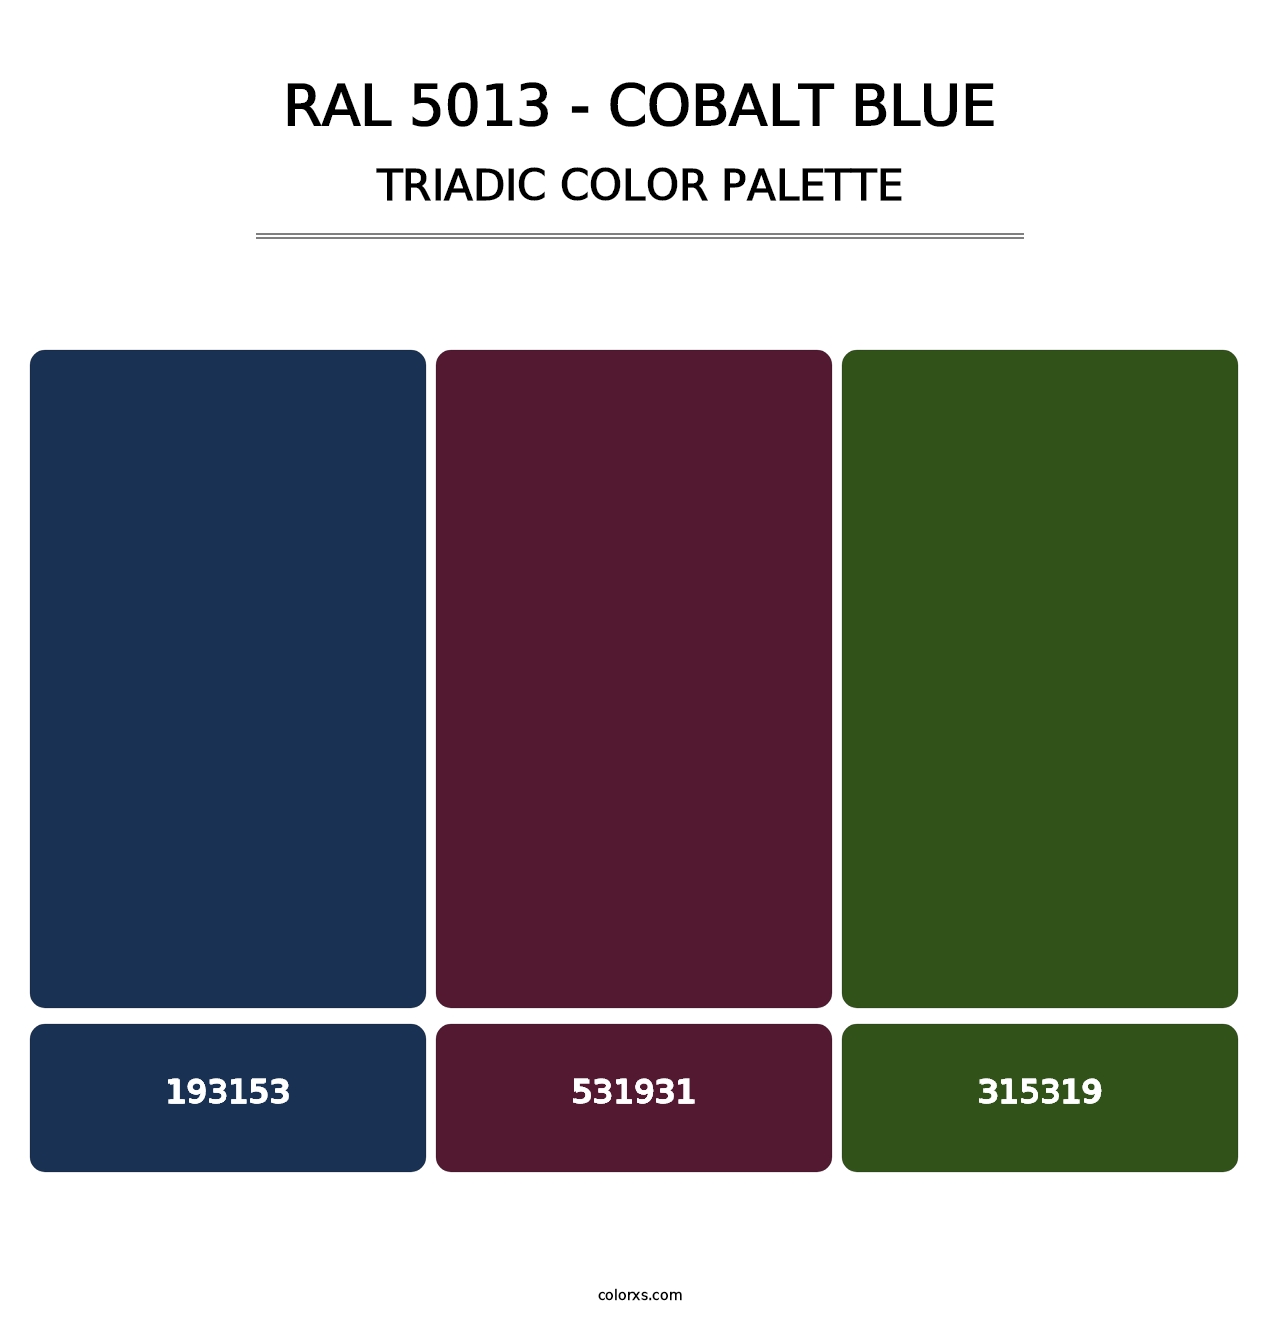 RAL 5013 - Cobalt Blue - Triadic Color Palette